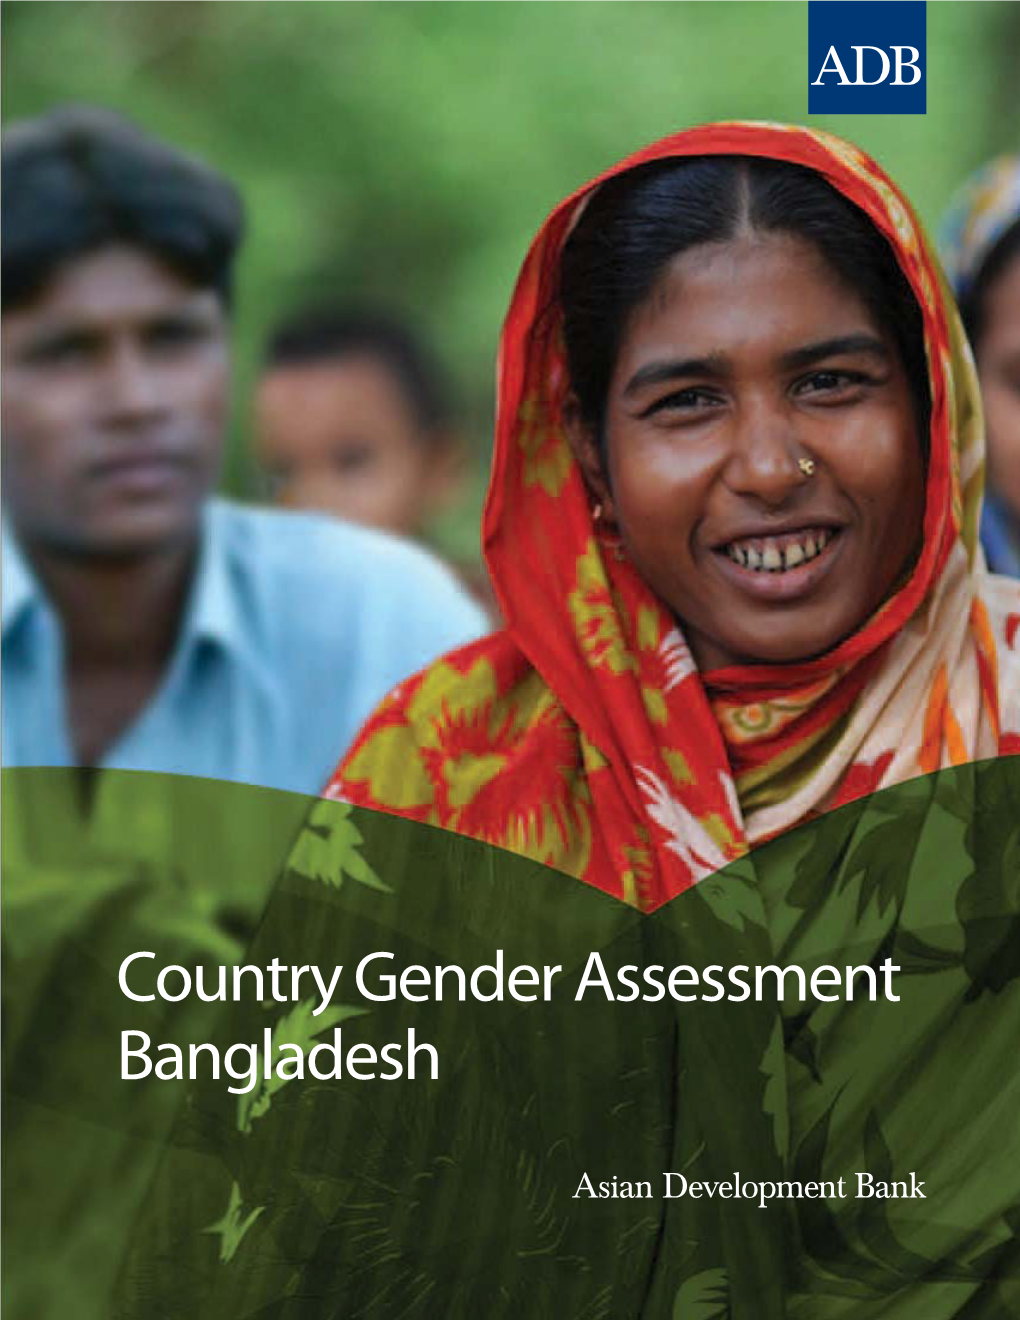 Country Gender Assessment: Bangladesh